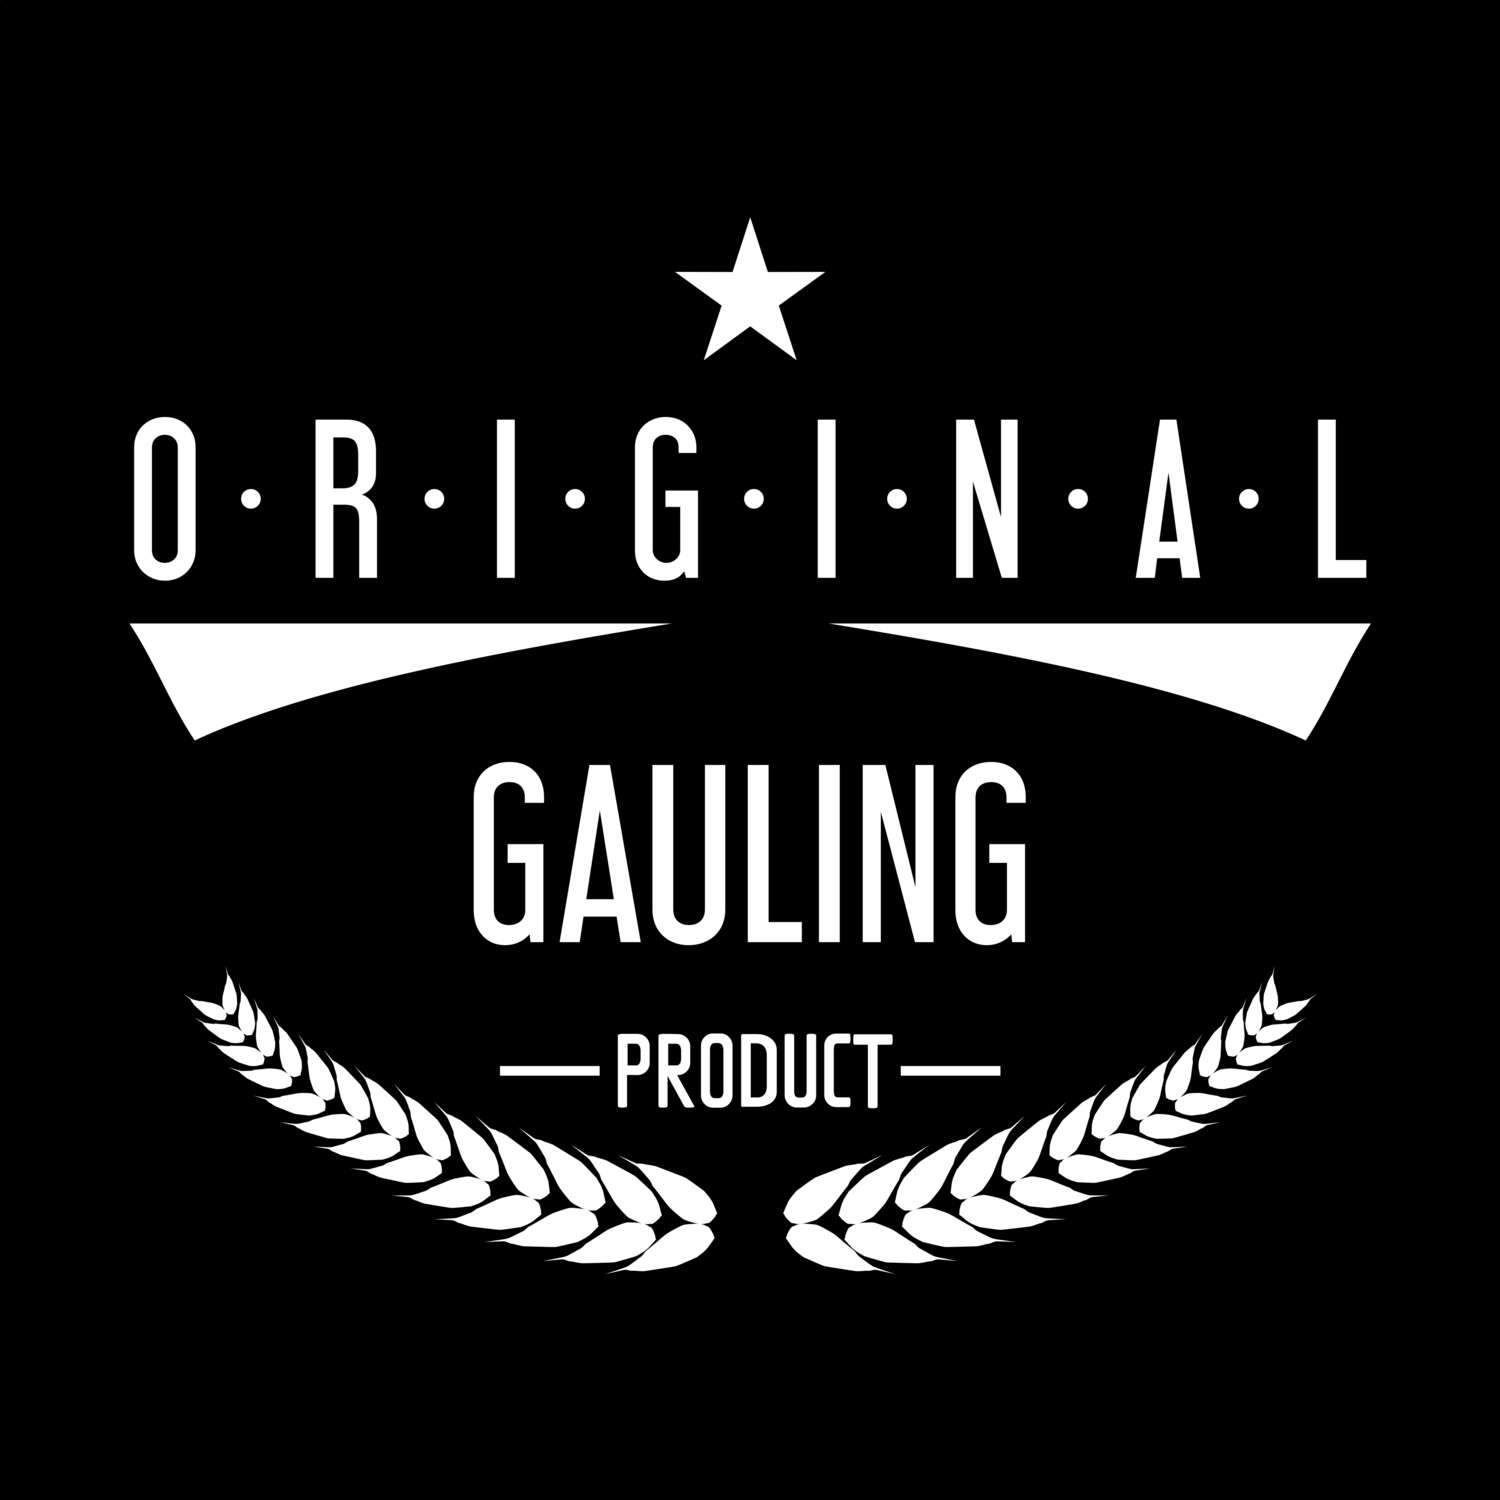 Gauling T-Shirt »Original Product«